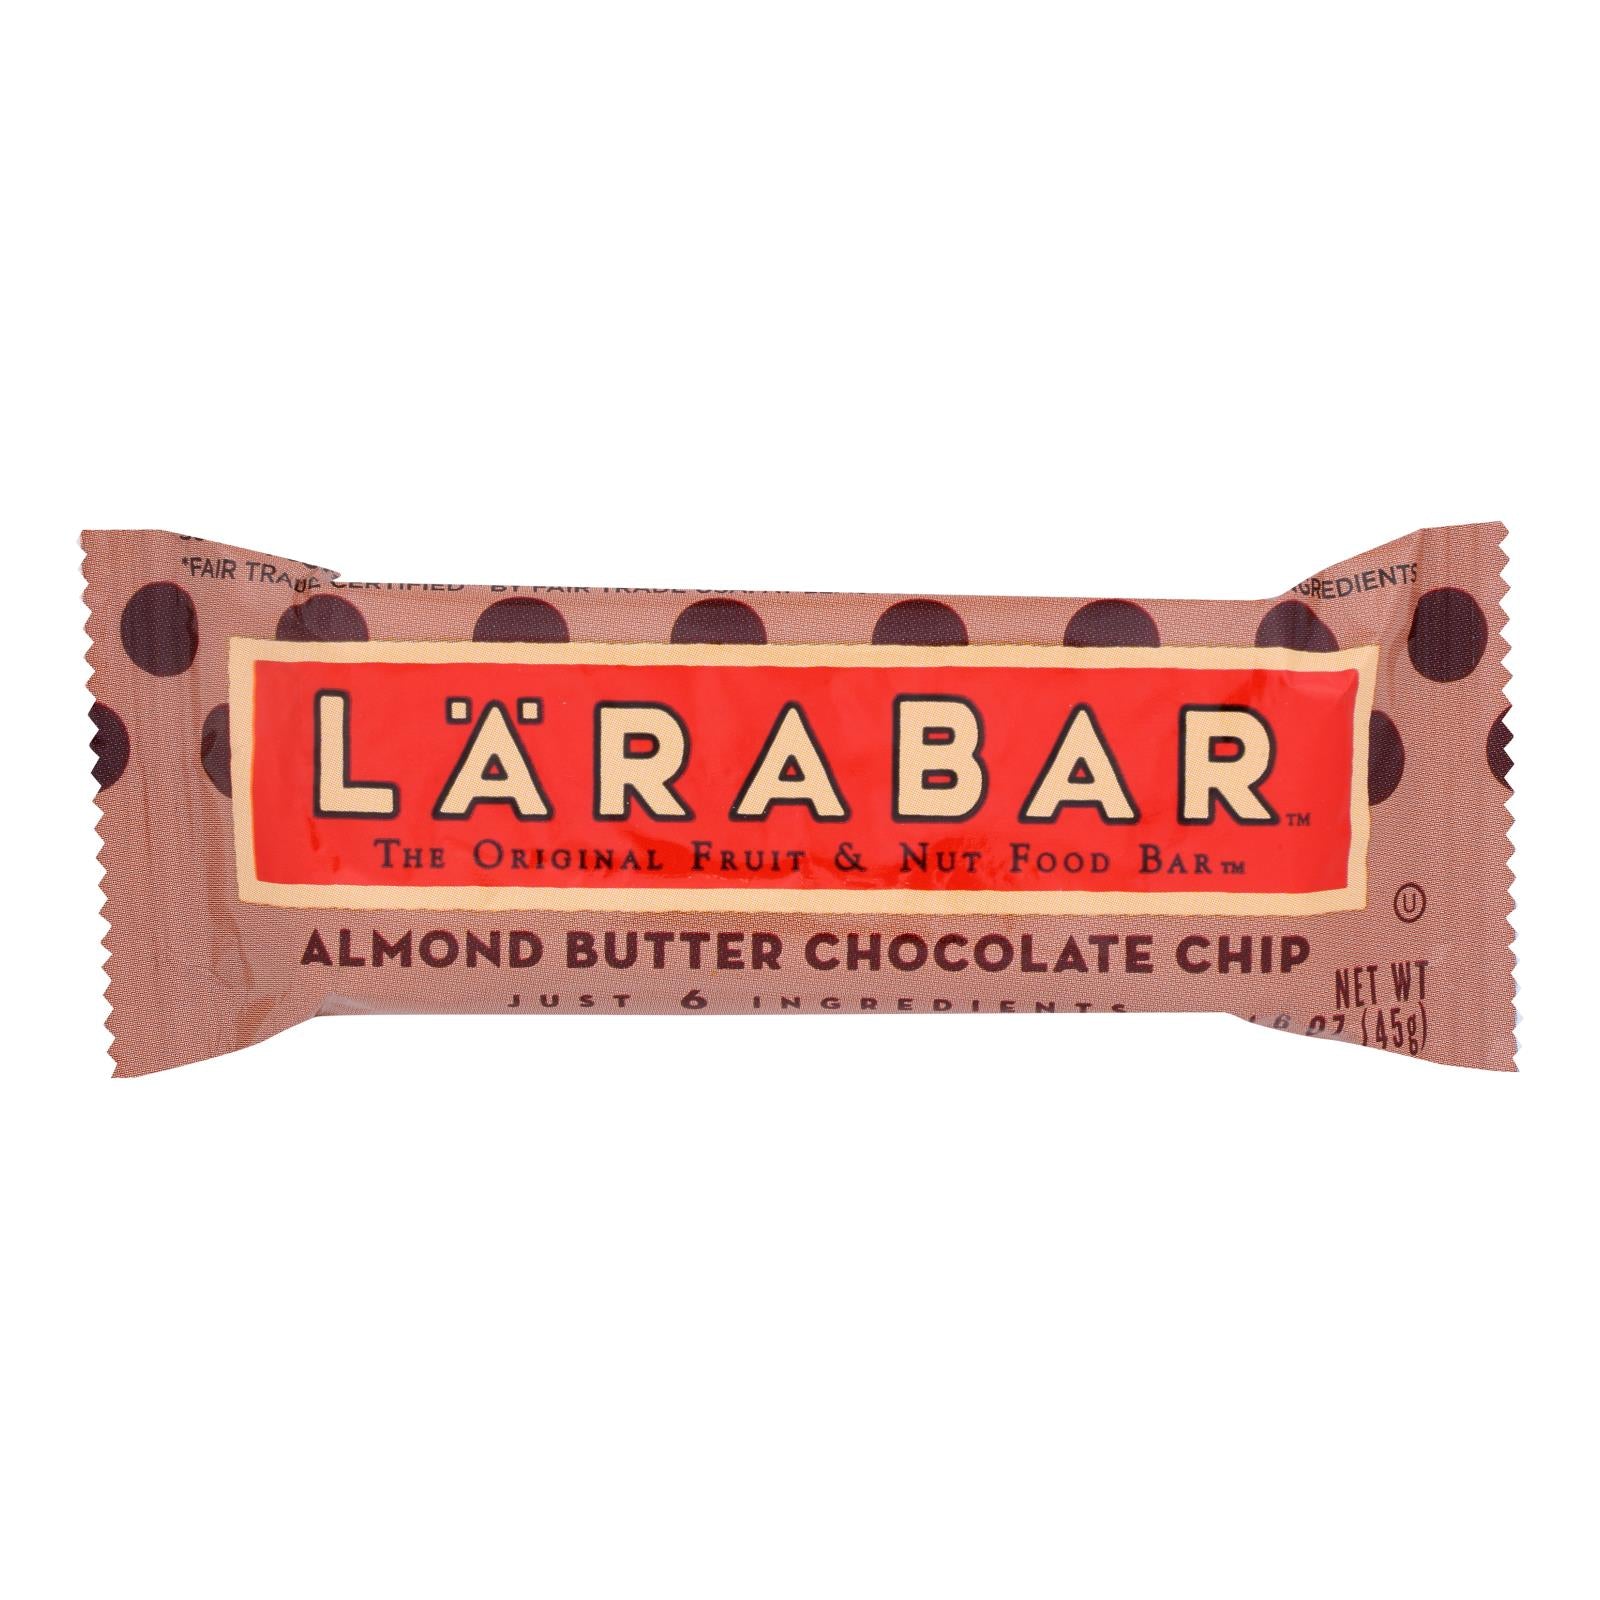 Larabar - Original Fruit and Nut Bar - Almond Butter Chocolate Chip - Case of 16 - 1.6 oz.